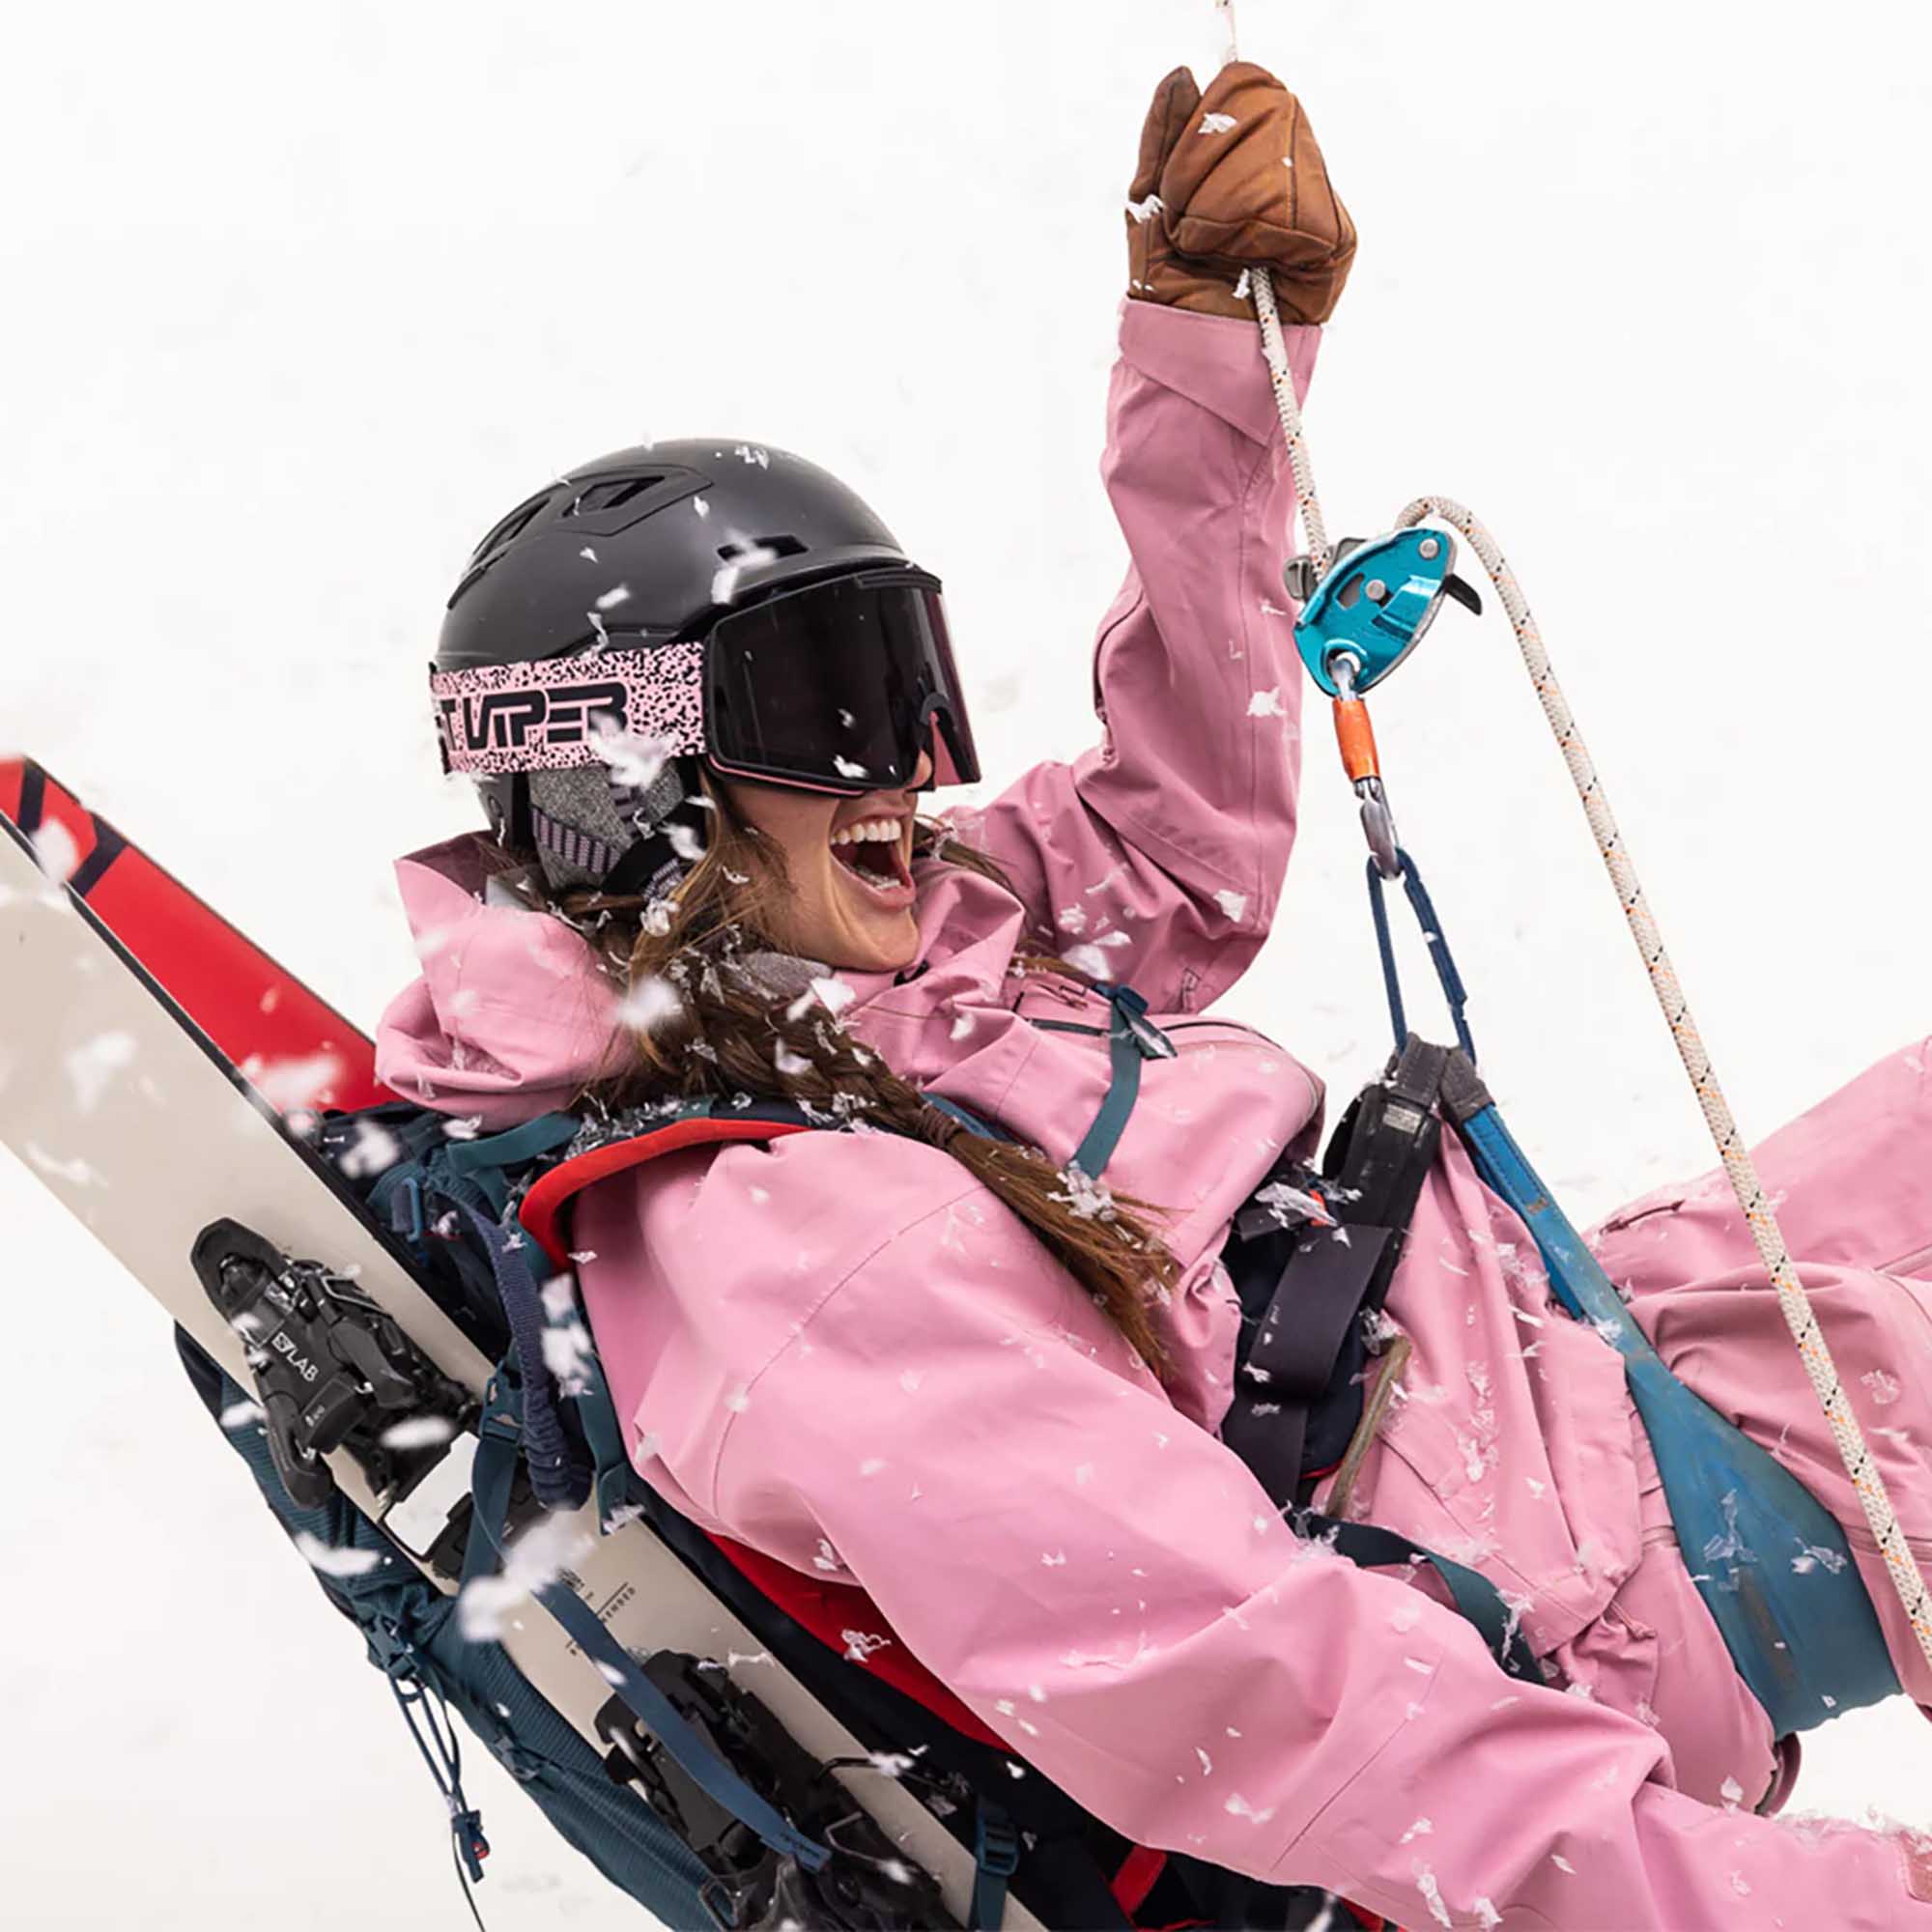 Pit Viper Proform Snowboard/Ski Goggles